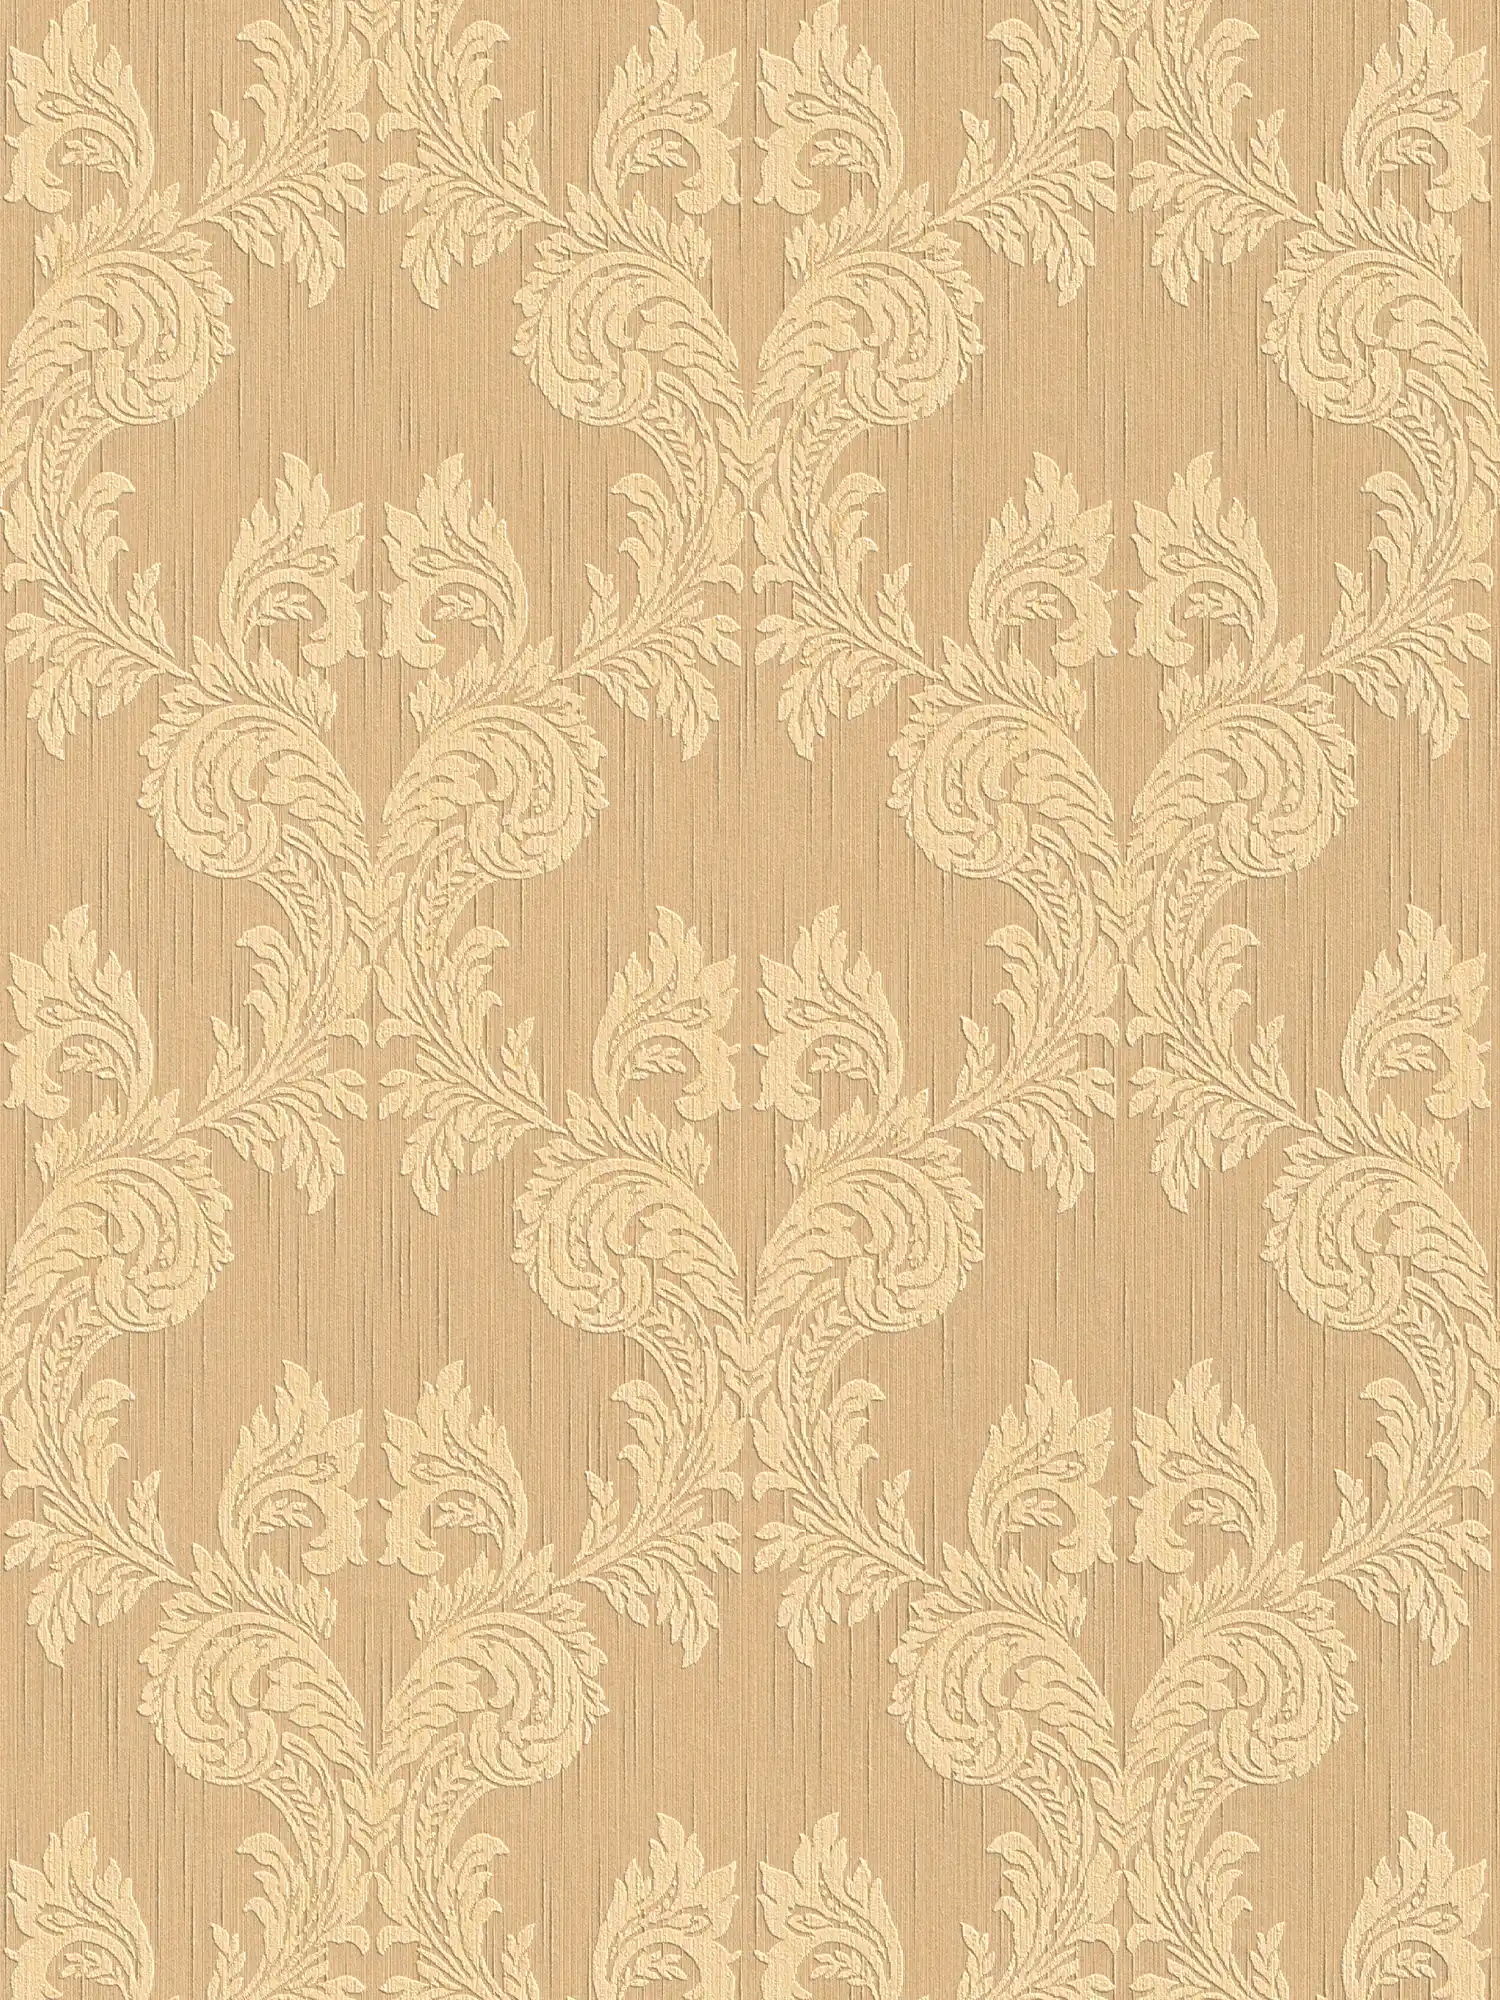 wallpaper textile texture & ornamental pattern in classic style - orange
